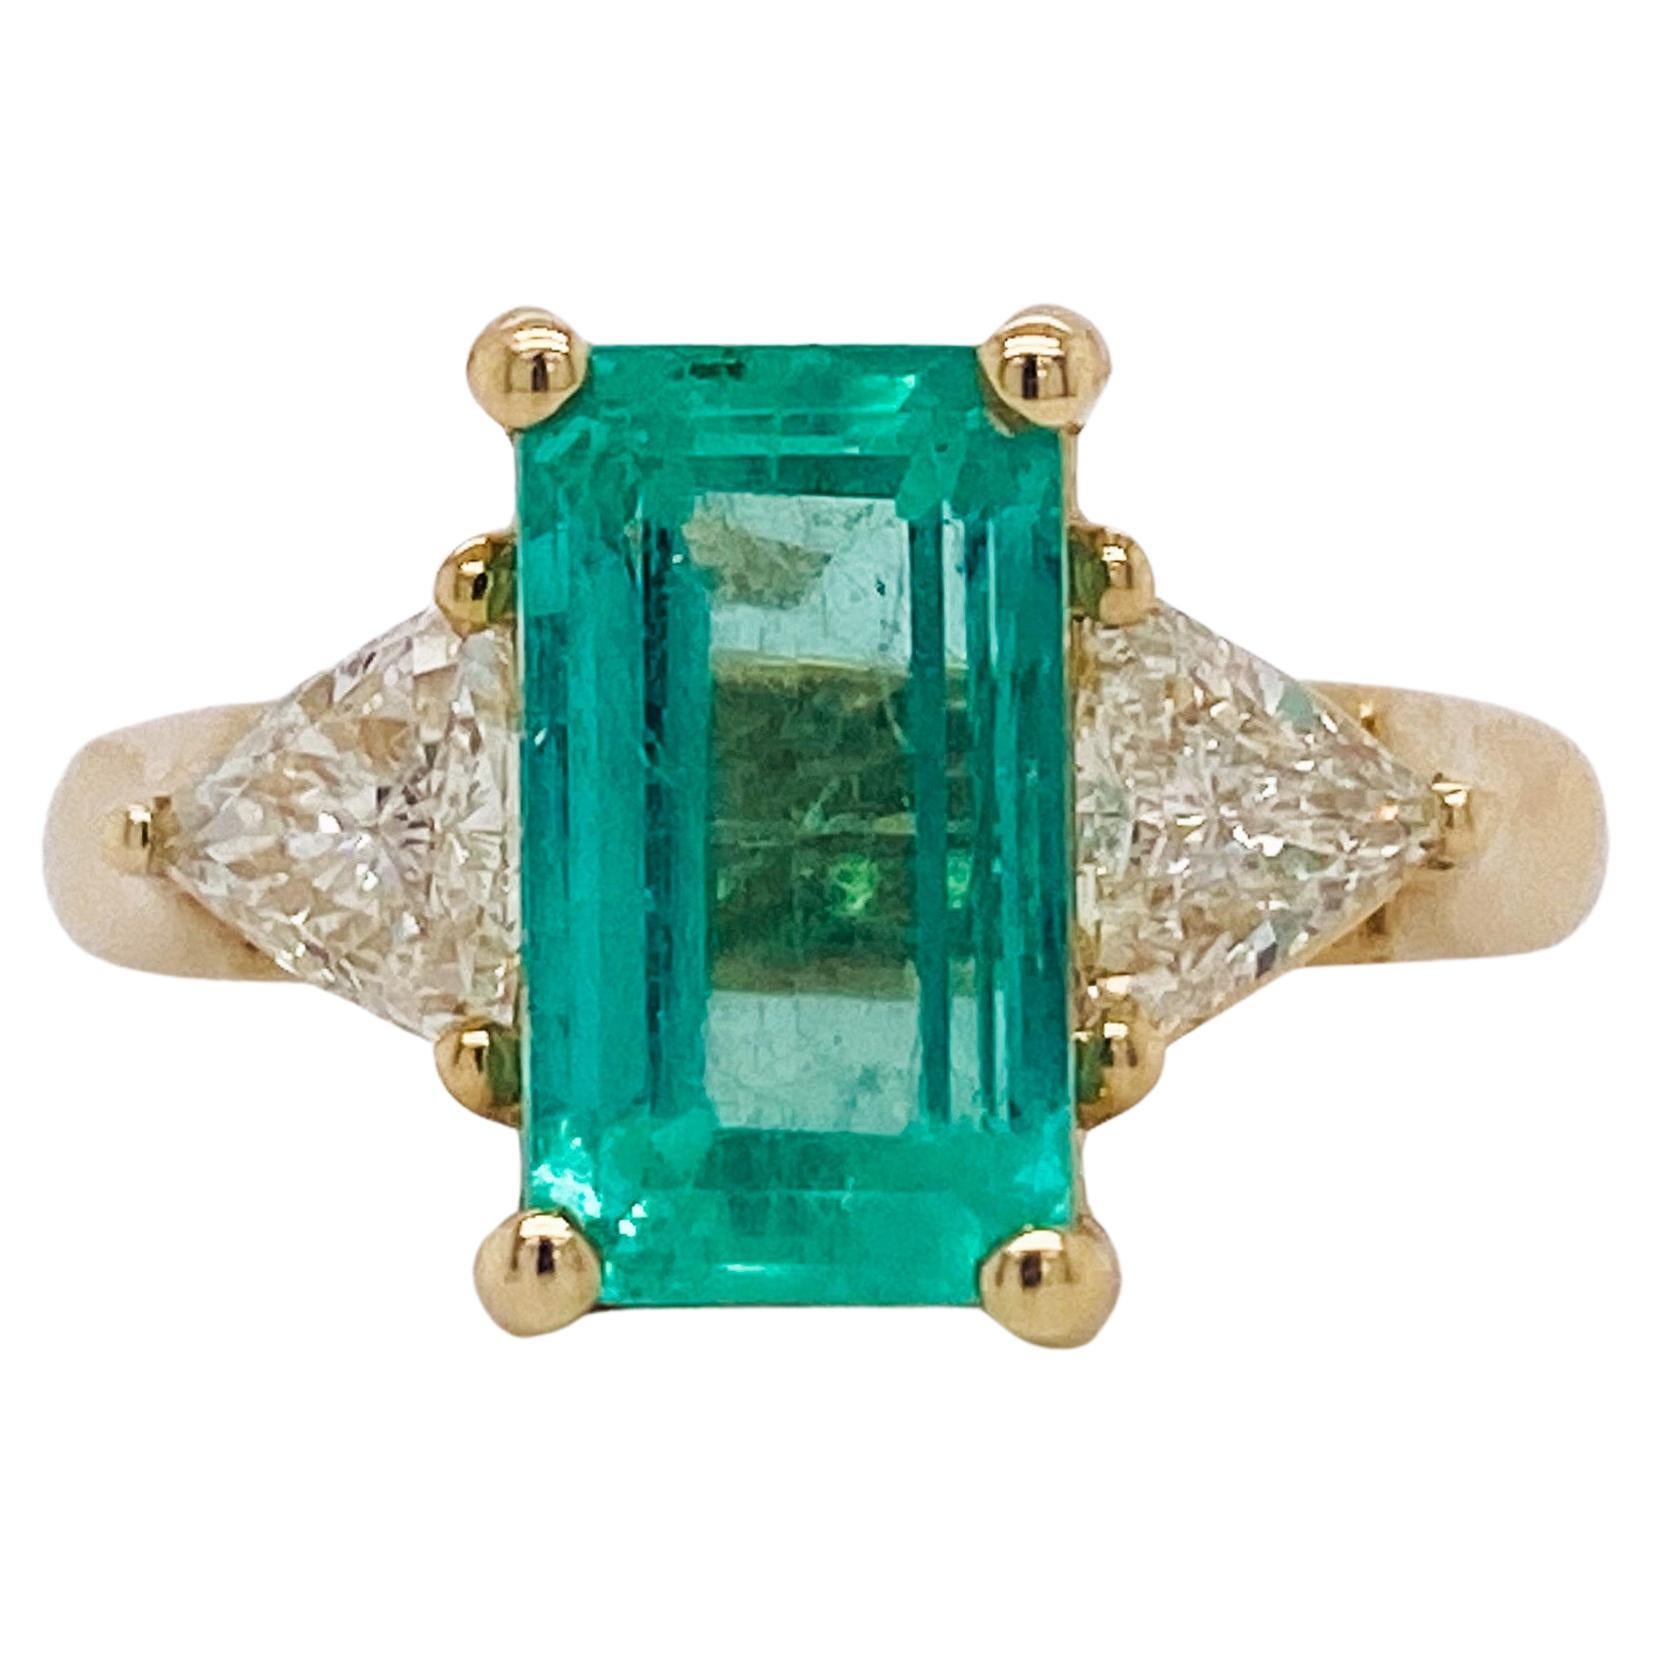 3.20 Carats Emerald and Trillion Diamond Three Stone Ring 14k Yellow Gold LV